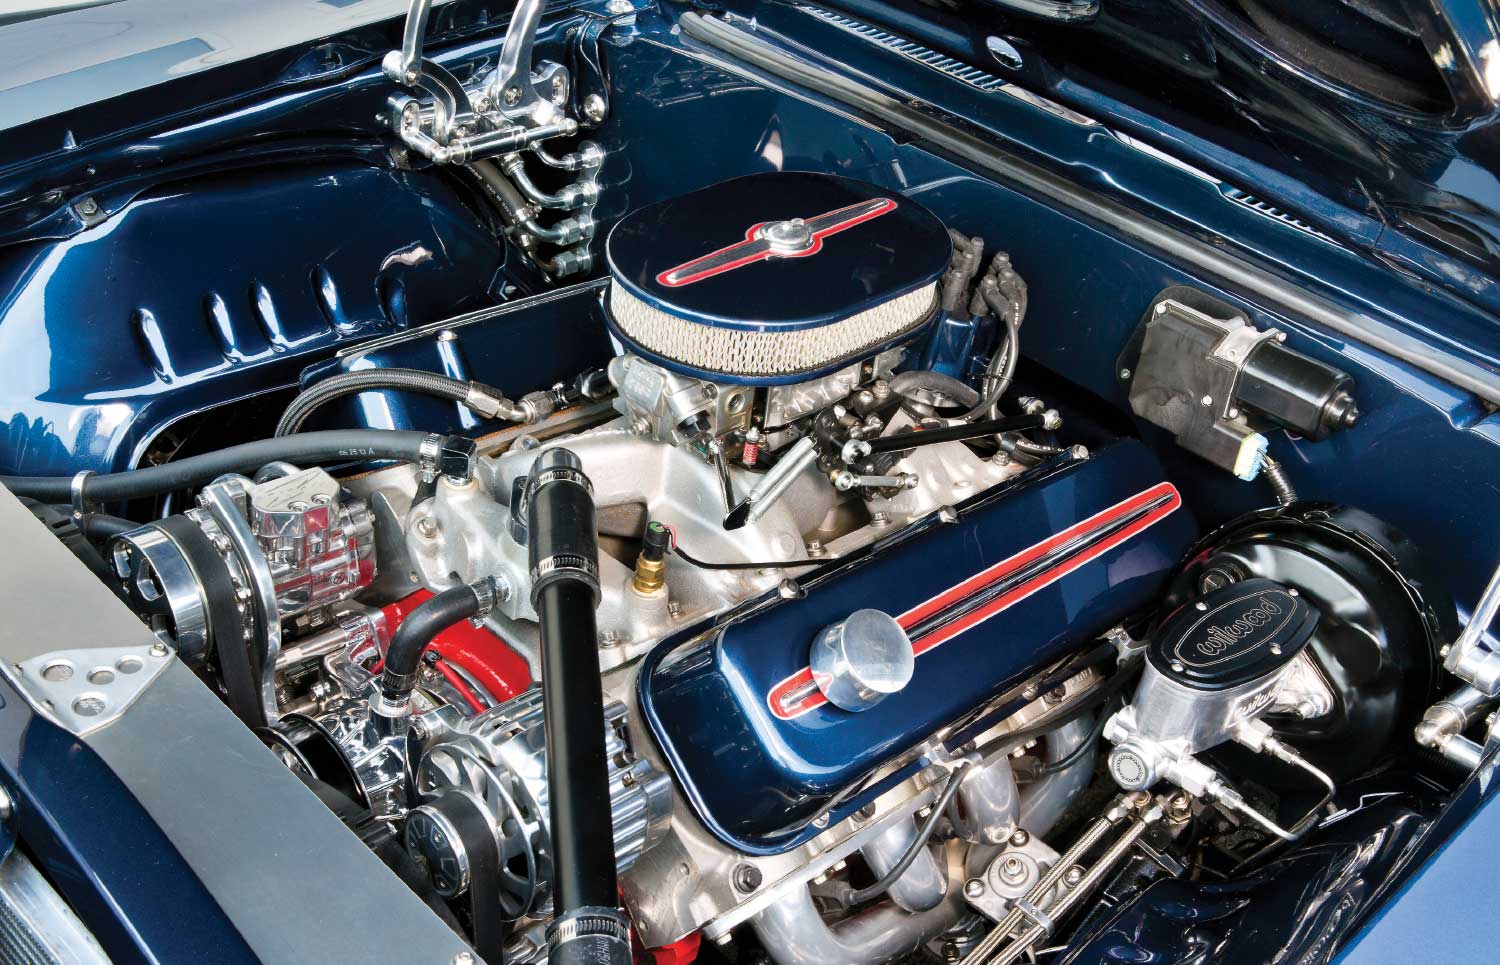 1969 Camaro's engine